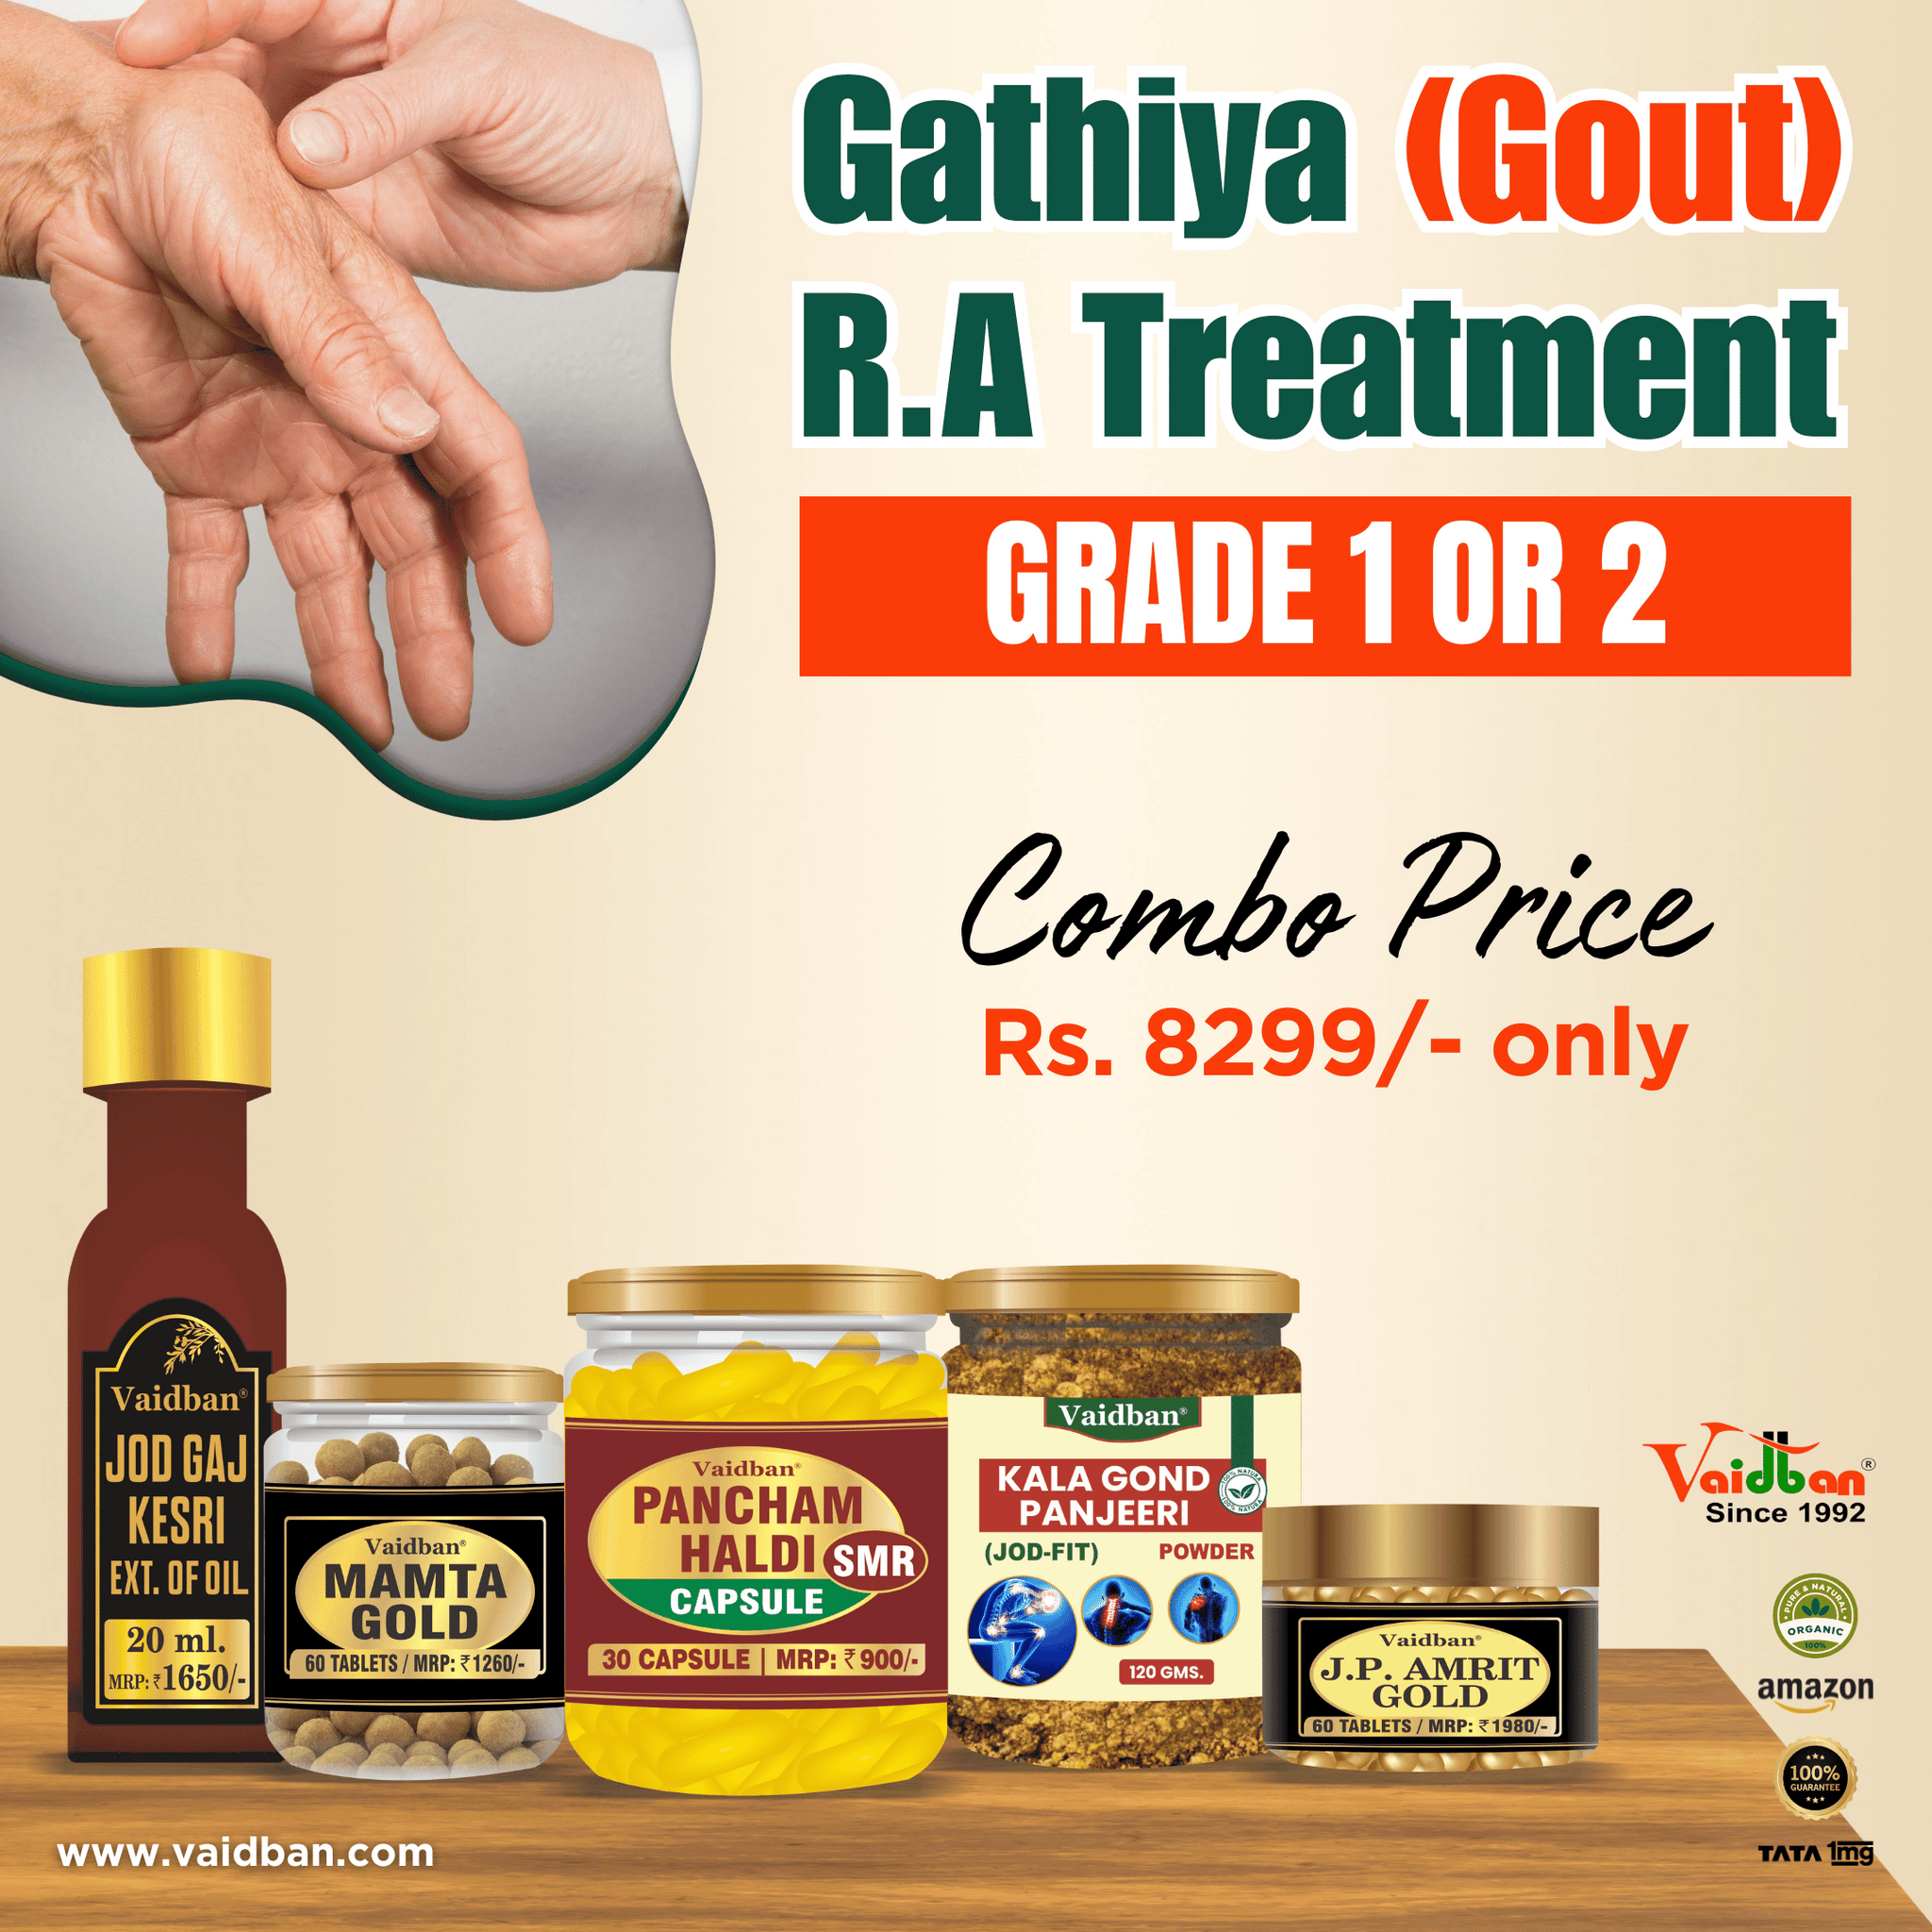 Vaidban Gathiya (Gout) R.A Treatment Combo for Grade 1 & 2